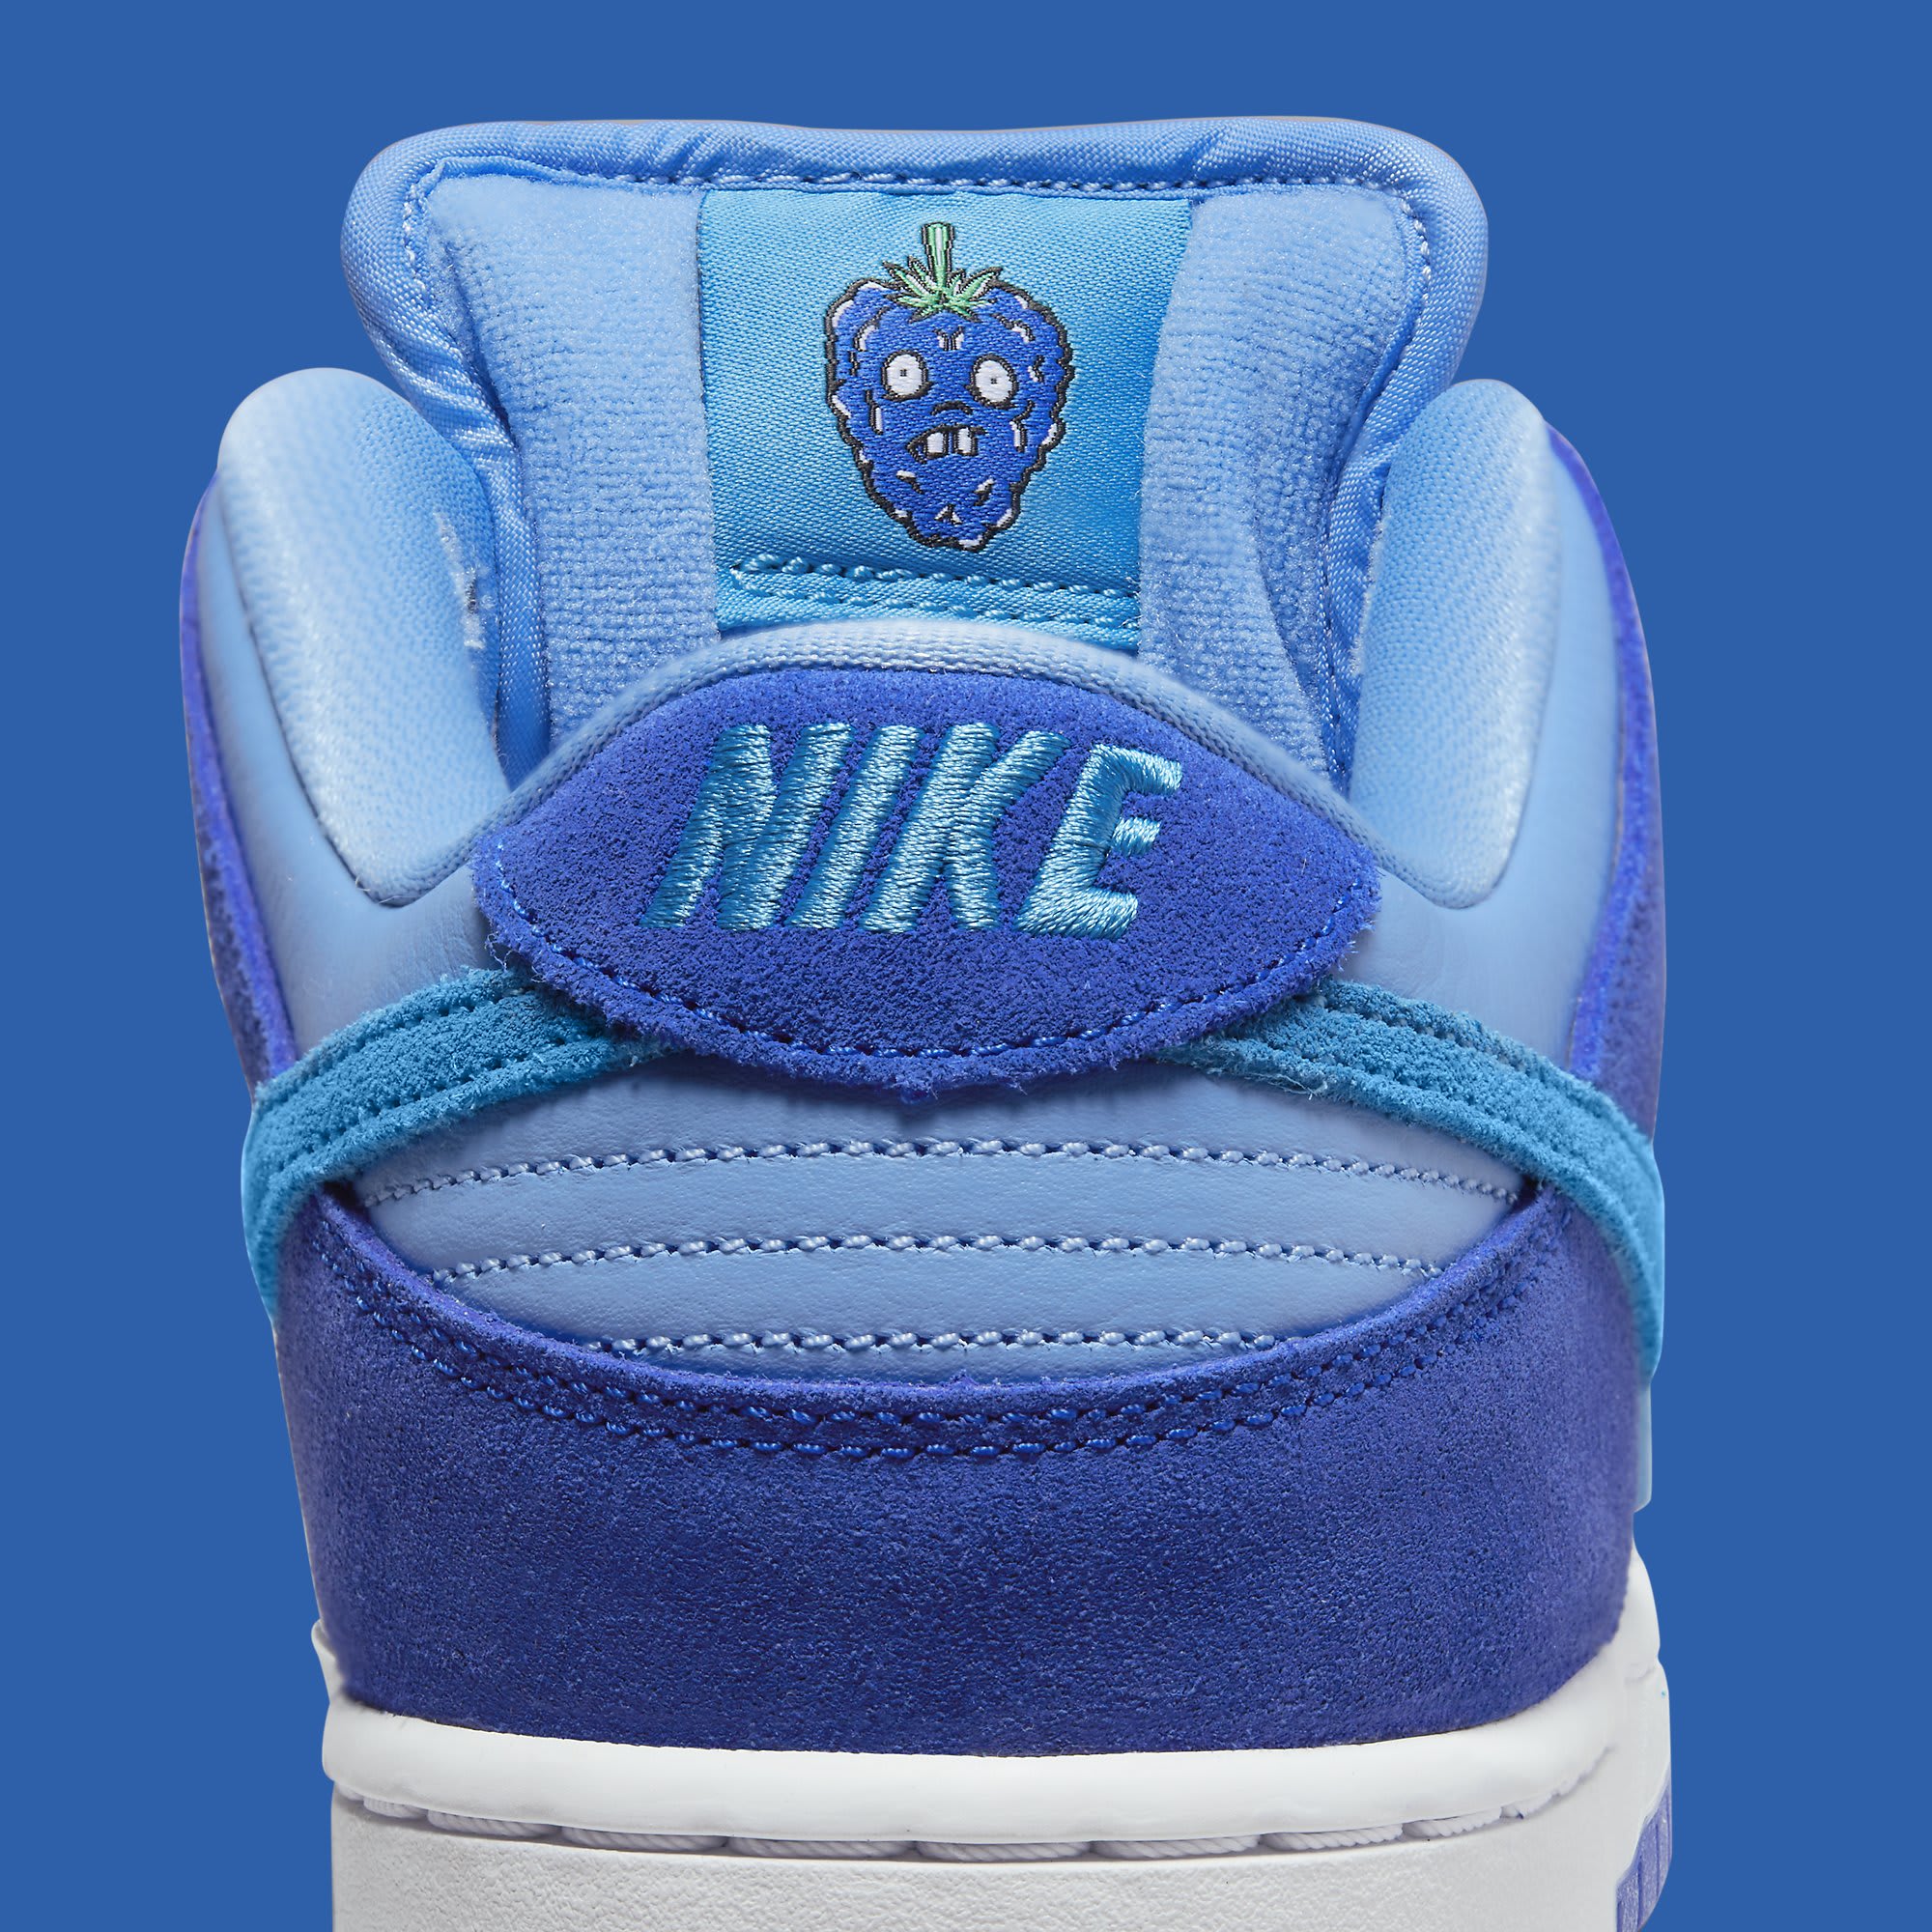 Cancel Flawless desk Nike SB Dunk Low 'Blue Raspberry' Release Date 2022 DM0807 400 | Sole  Collector